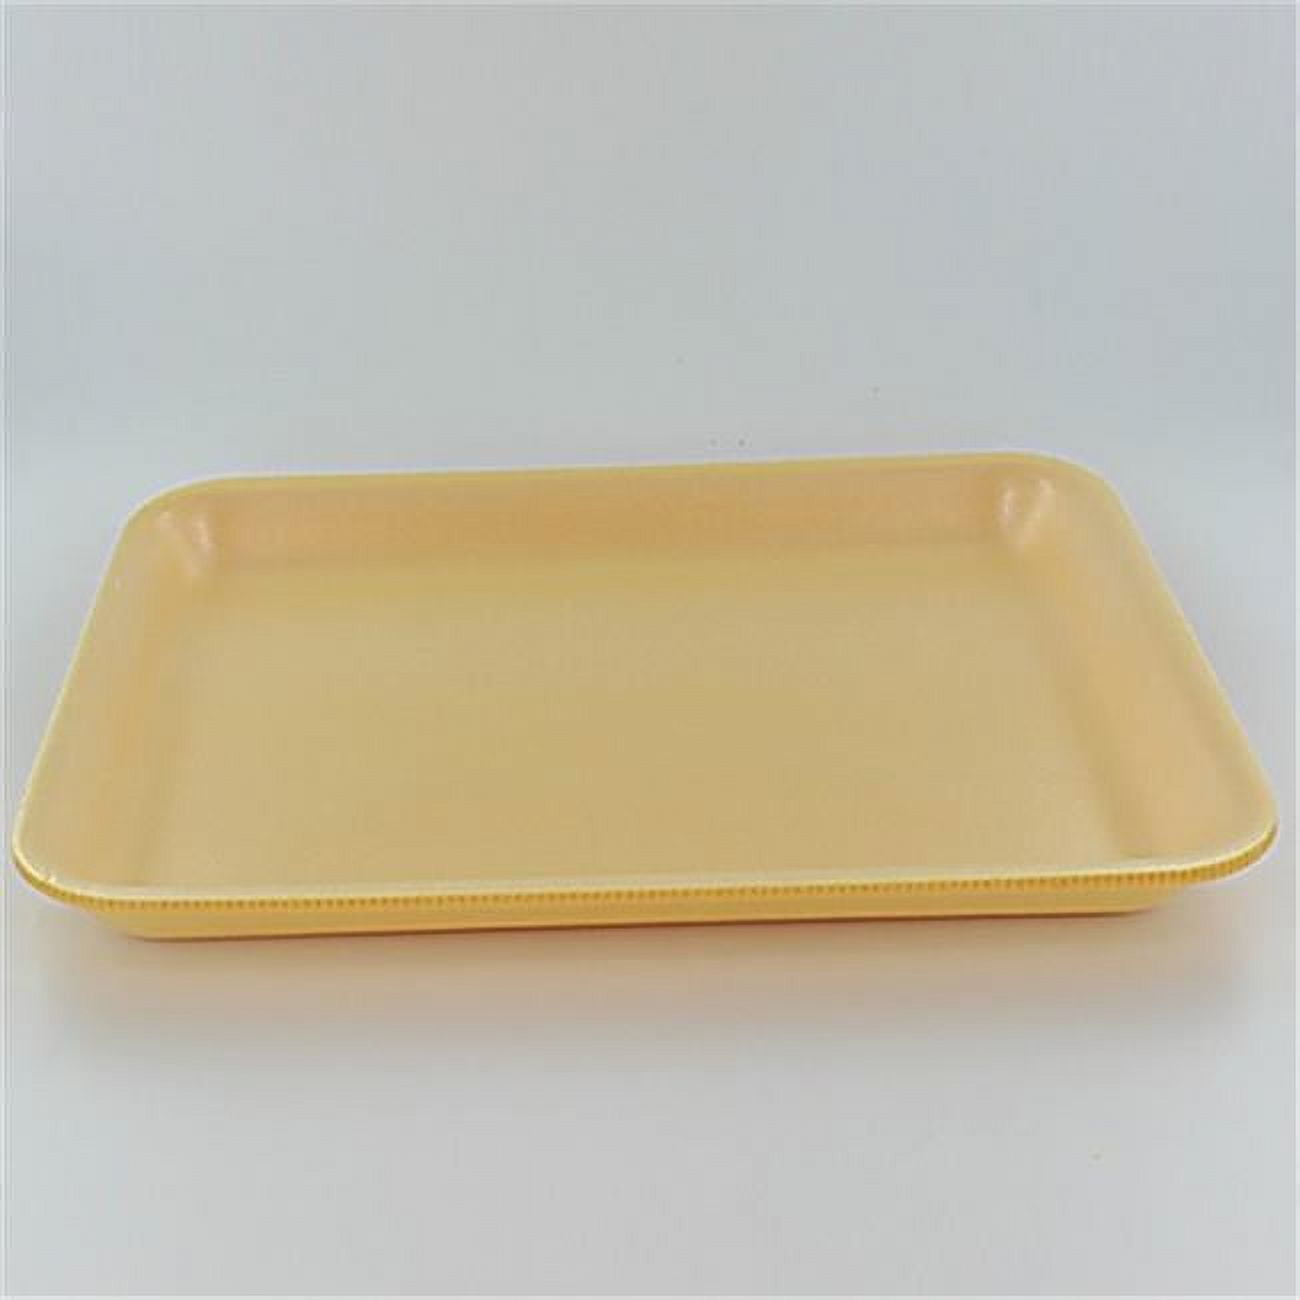 729901 Cpc Foam Supermarket Tray, Yellow - Case Of 500